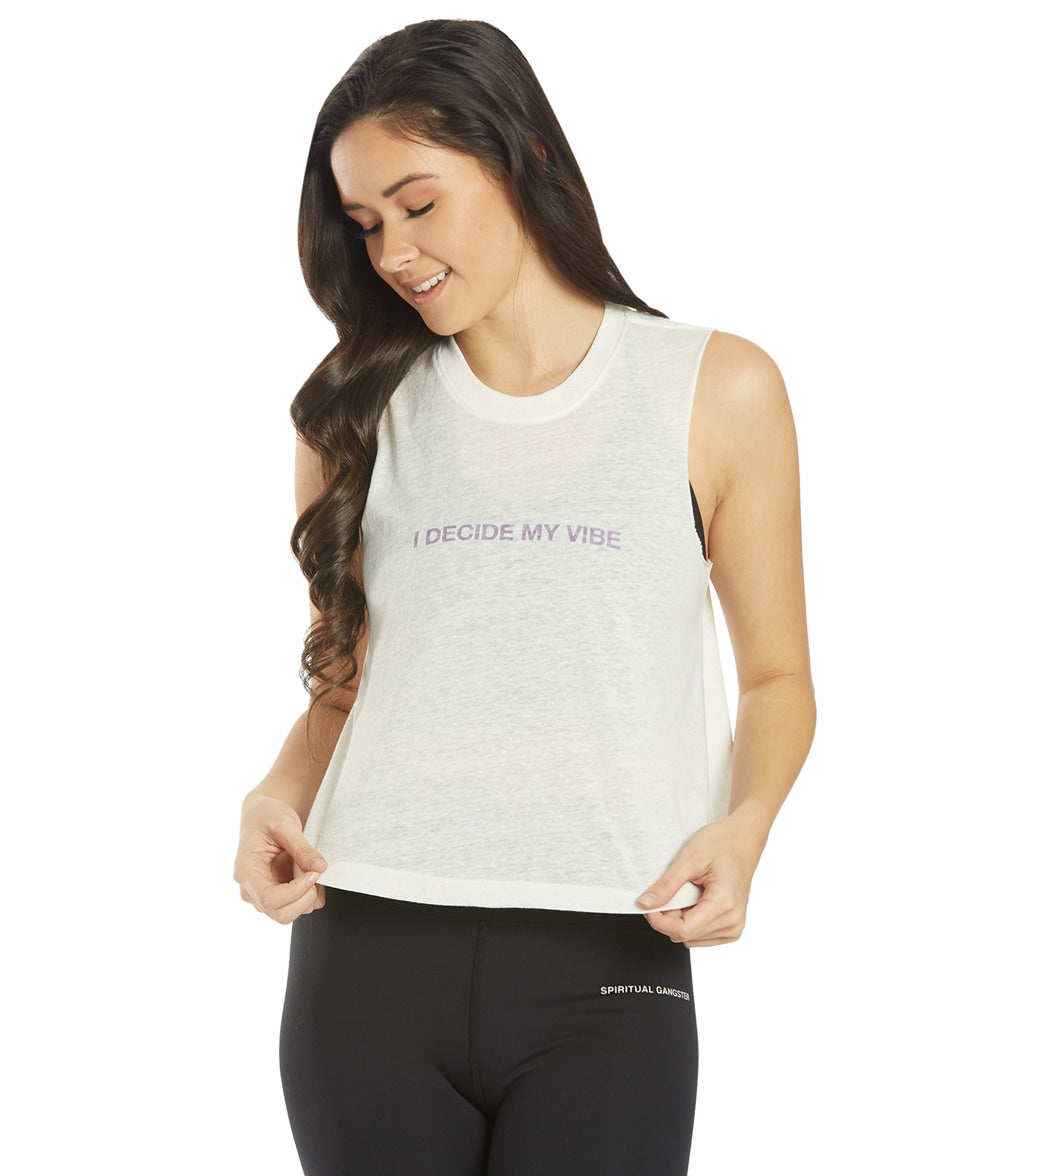 Squats Low Standards High - Yoga Shirts - Yoga T-Shirt Yoga Tops